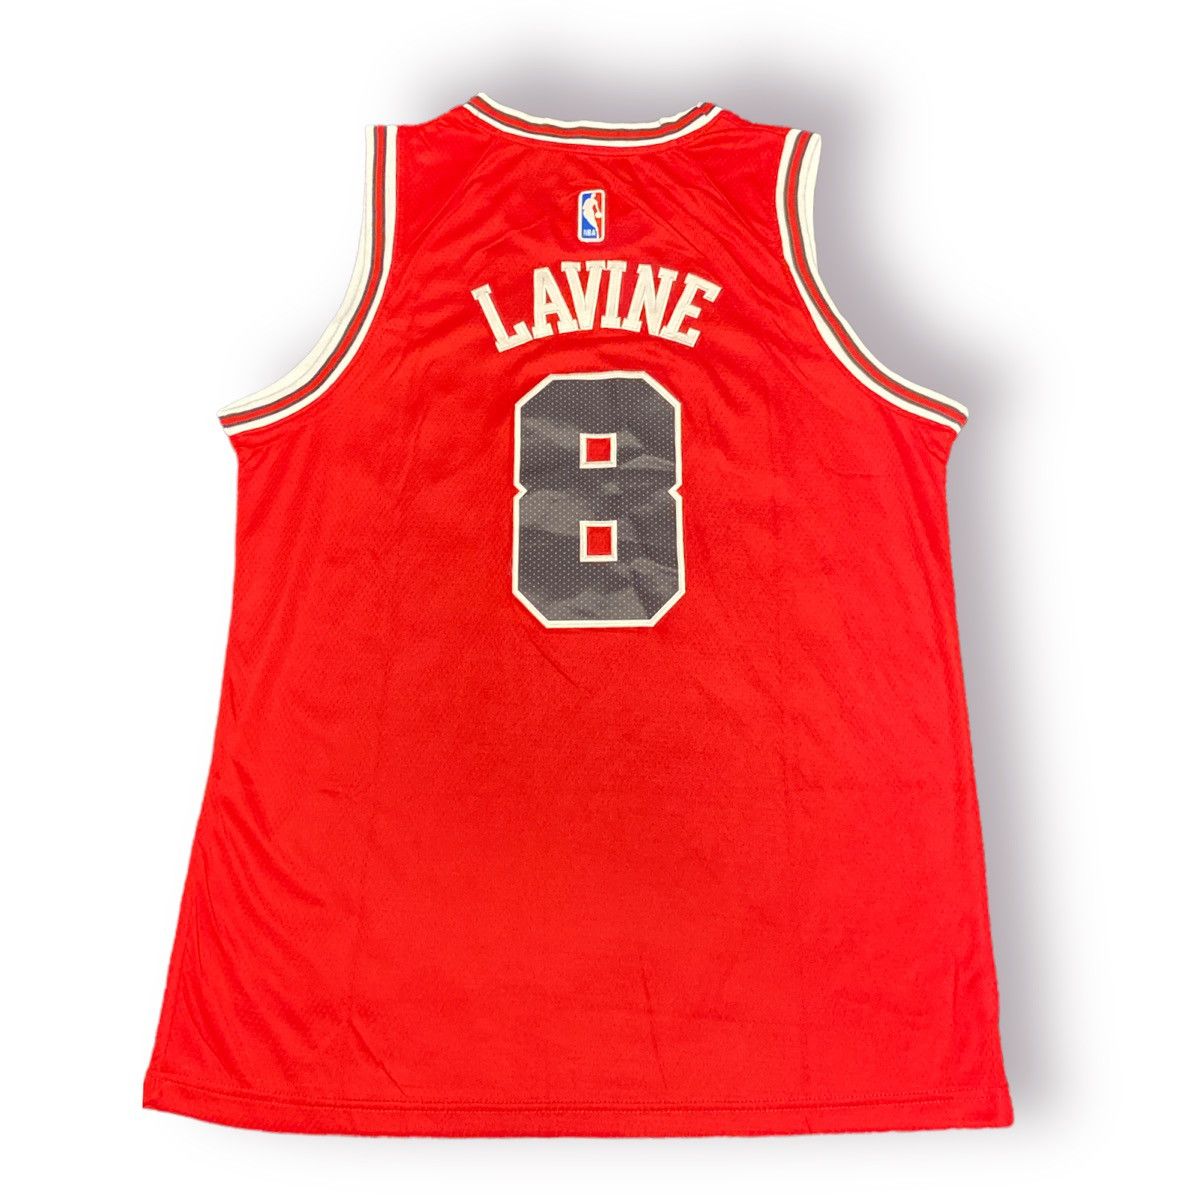 Nike Zach Lavine Nike Chicago Bulls Icon Swingman Jersey Size US L / EU 52-54 / 3 - 5 Preview